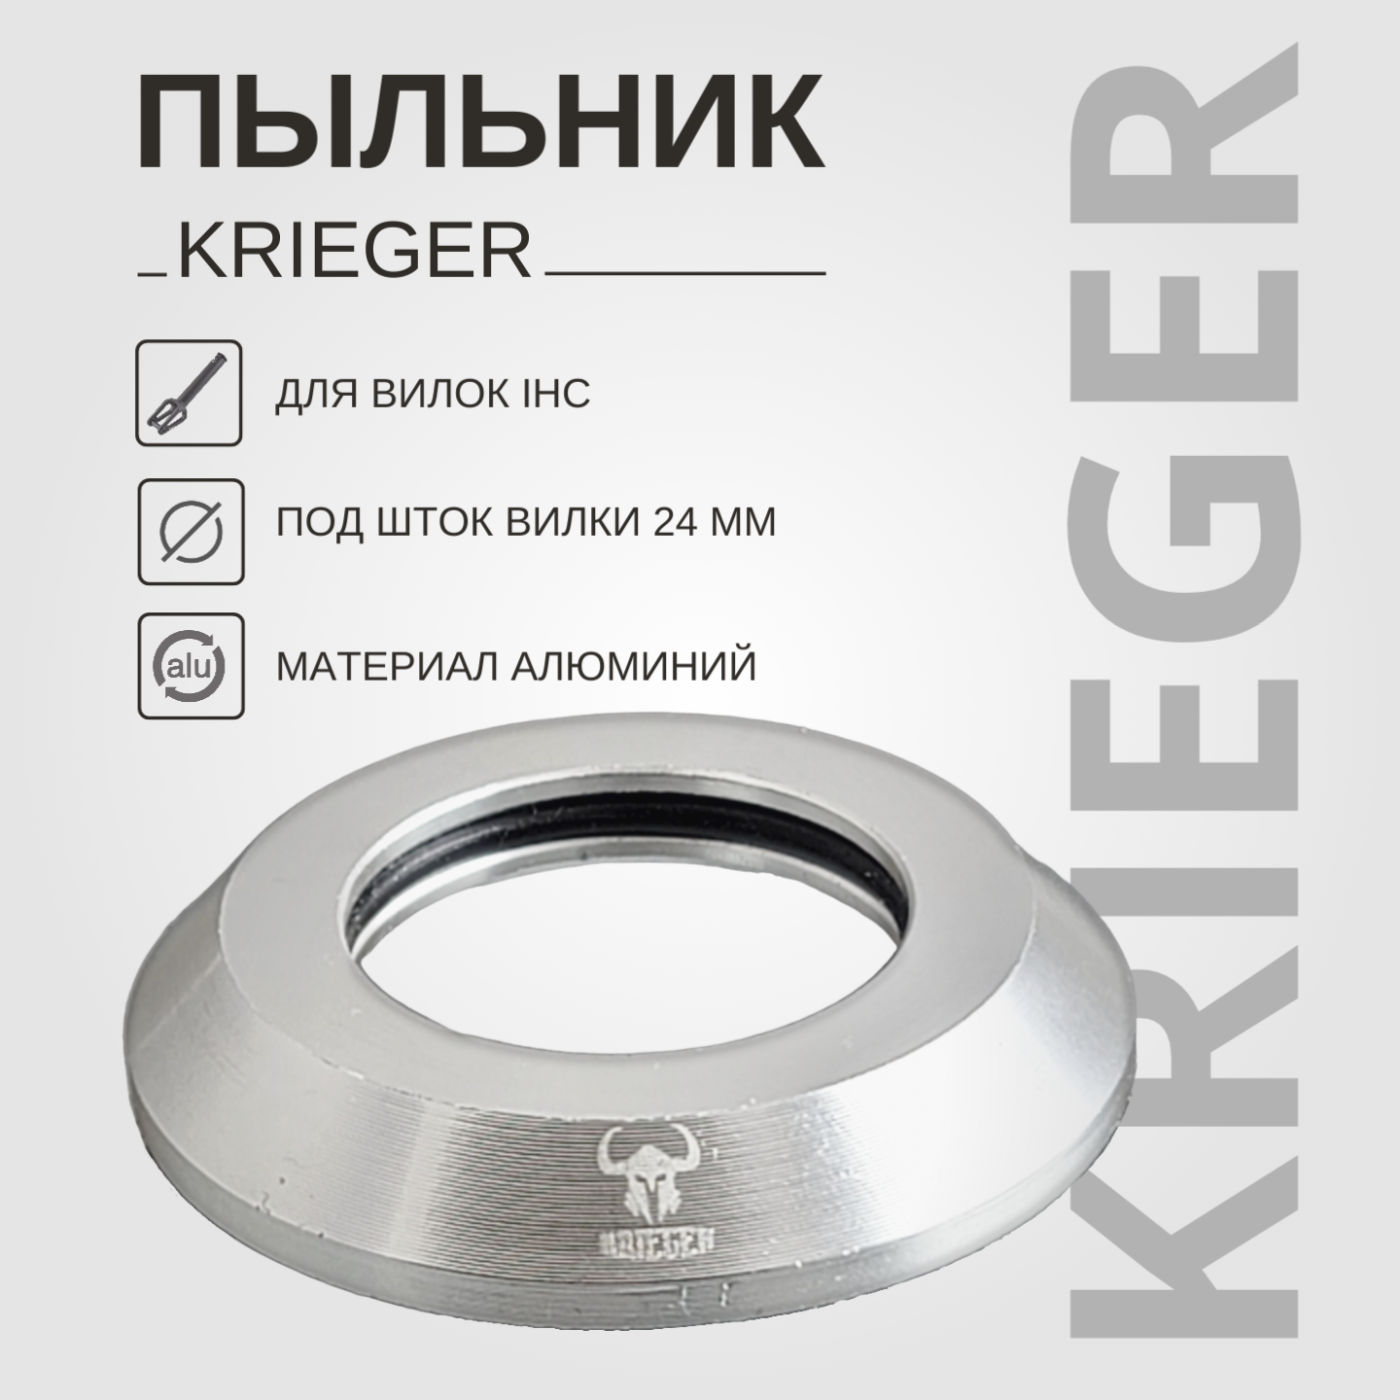 Пыльник IHC Krieger, серый